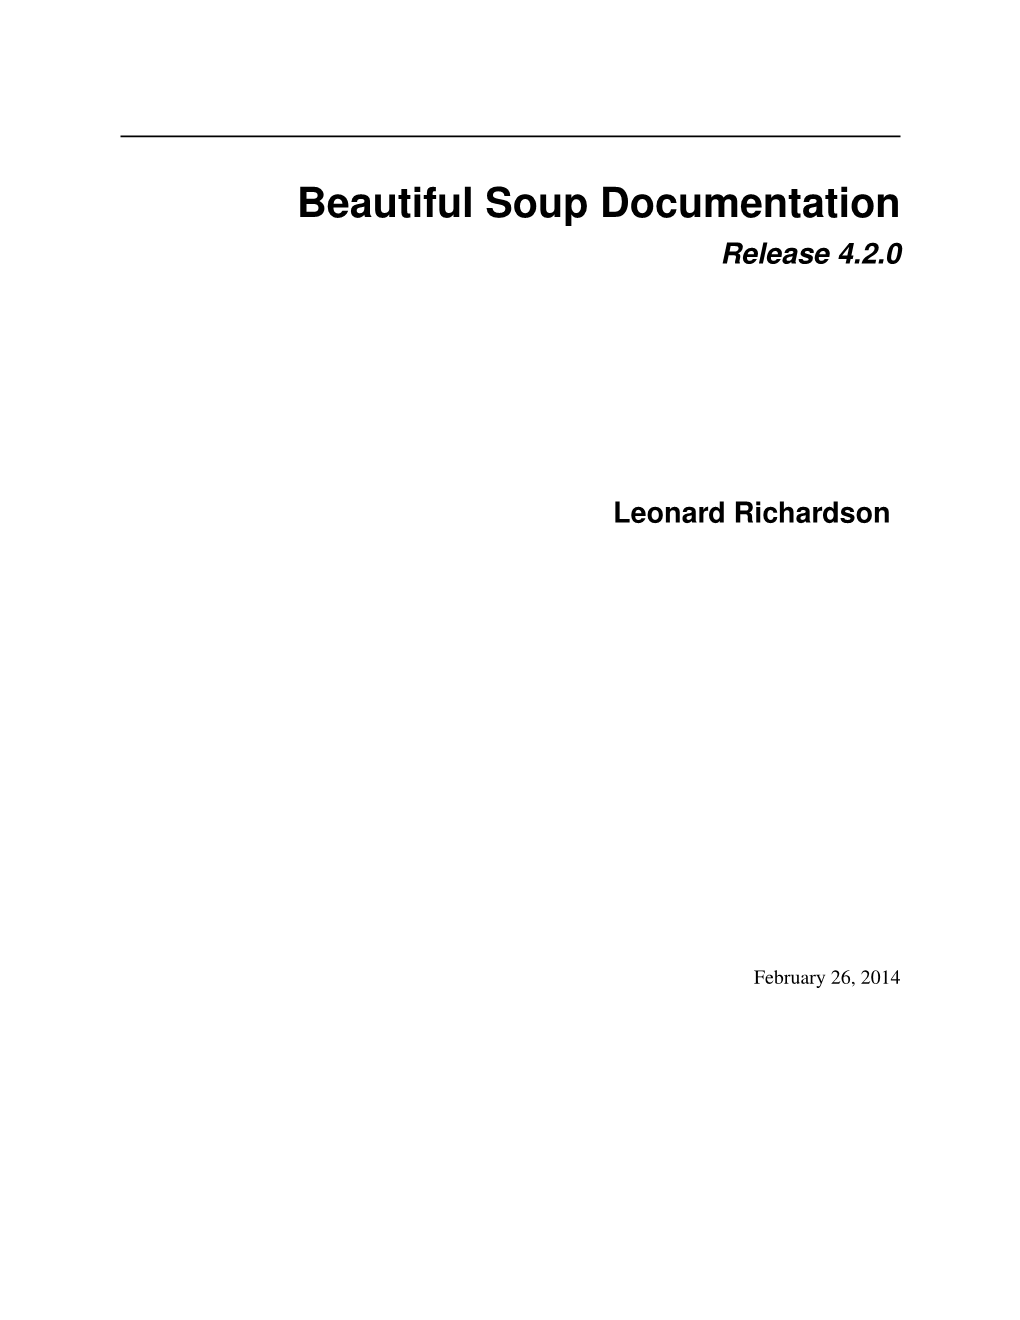 Beautiful Soup Documentation Release 4.2.0